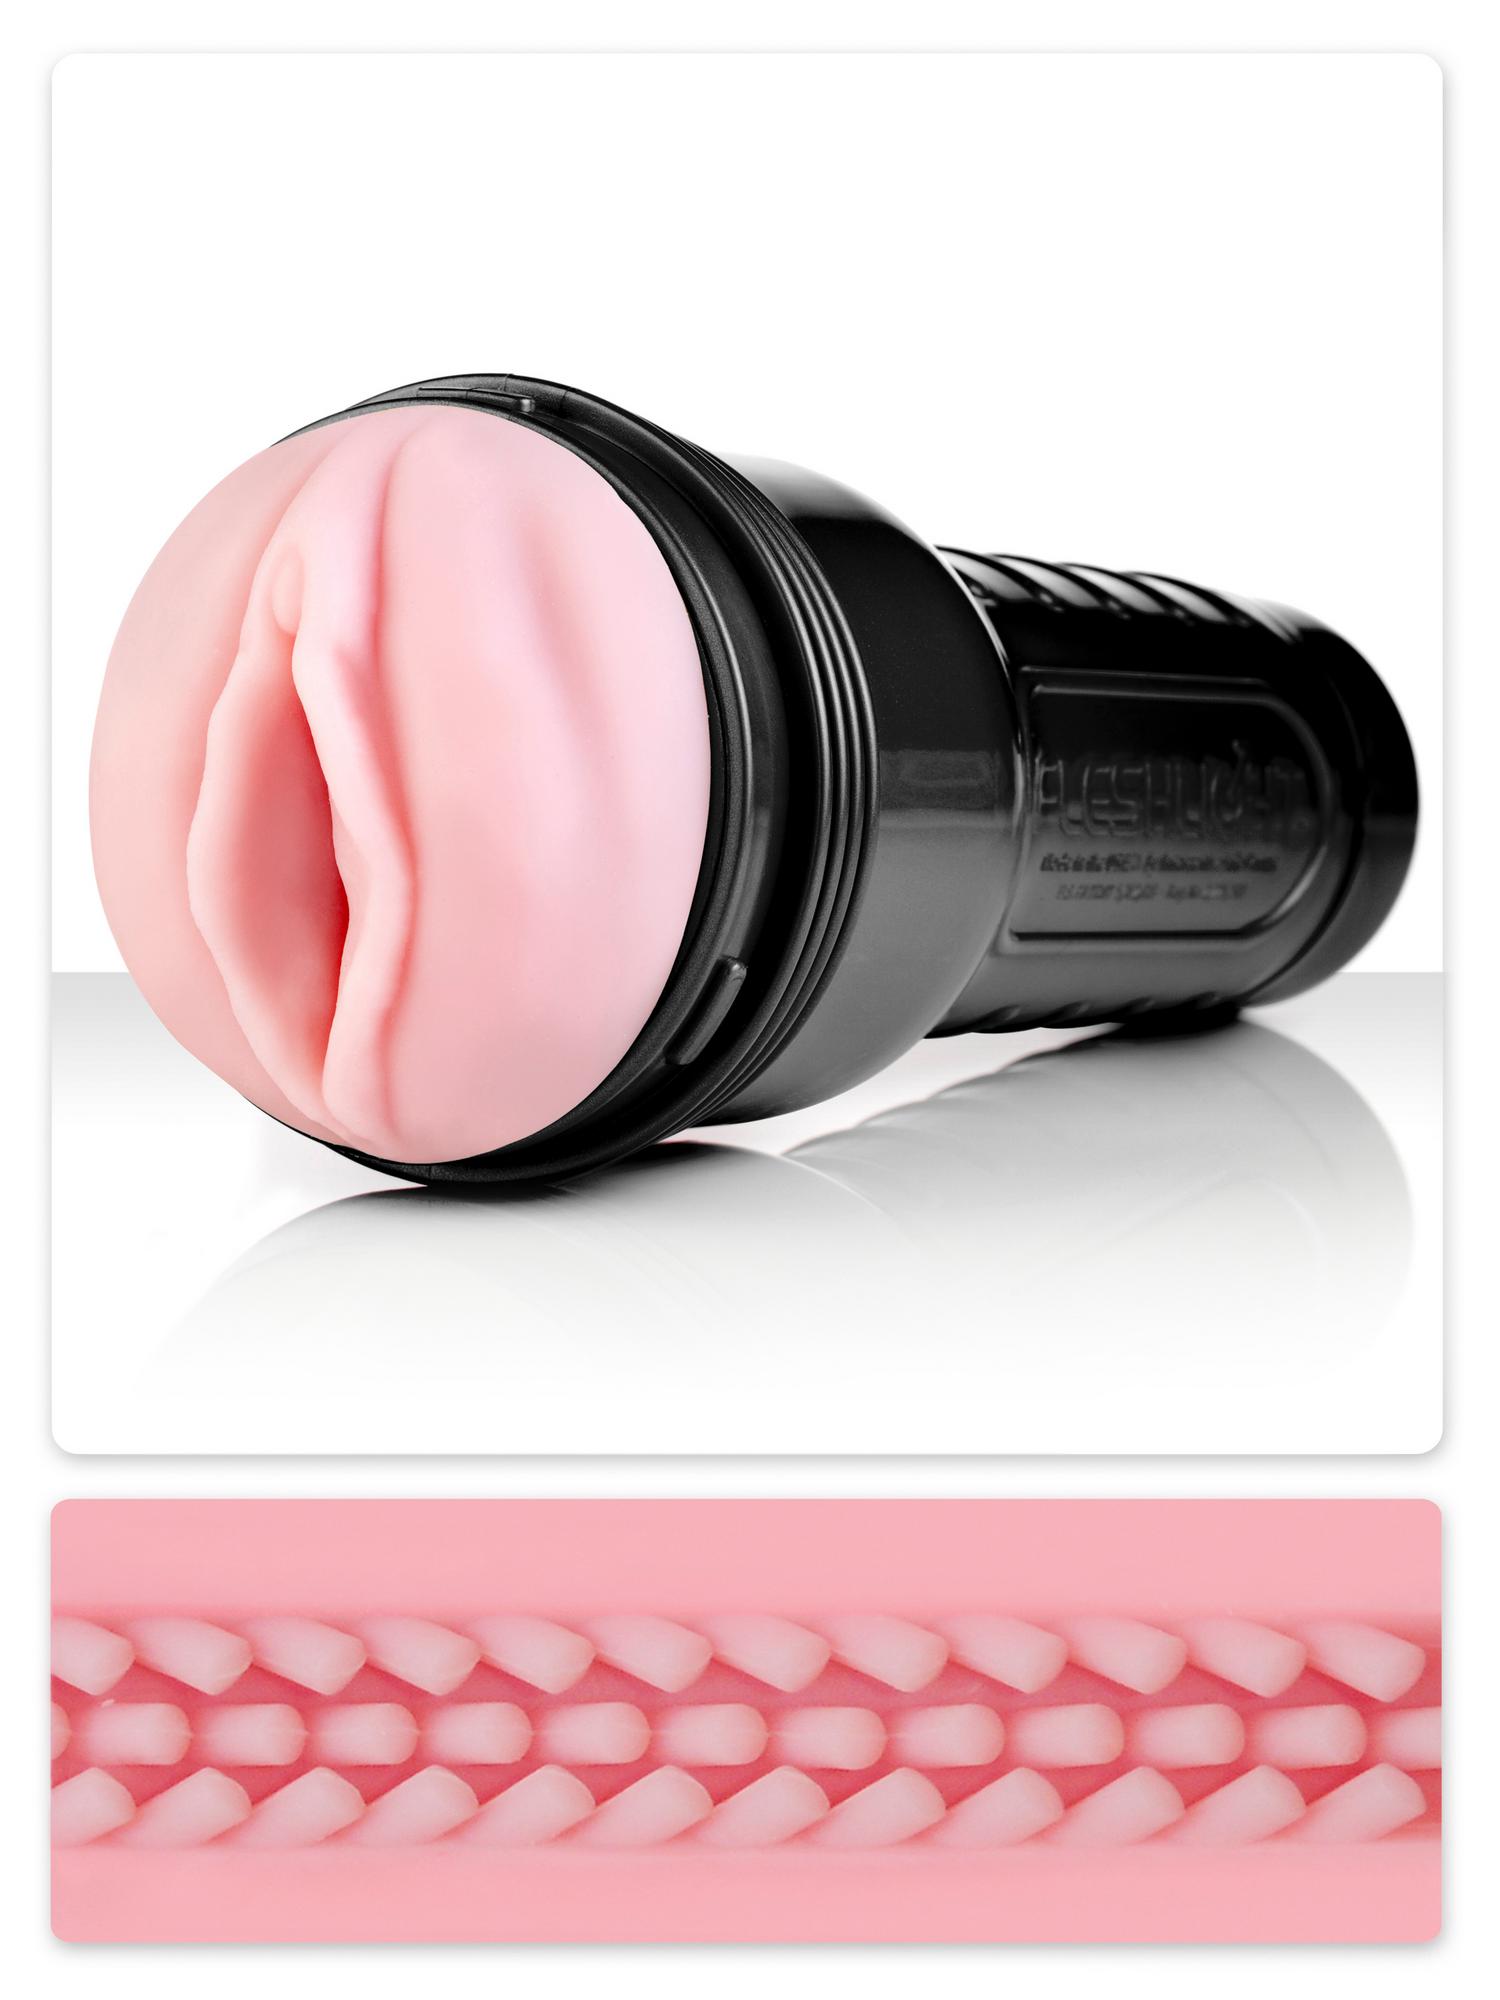 Product Fleshlight Vibro Pink Lady